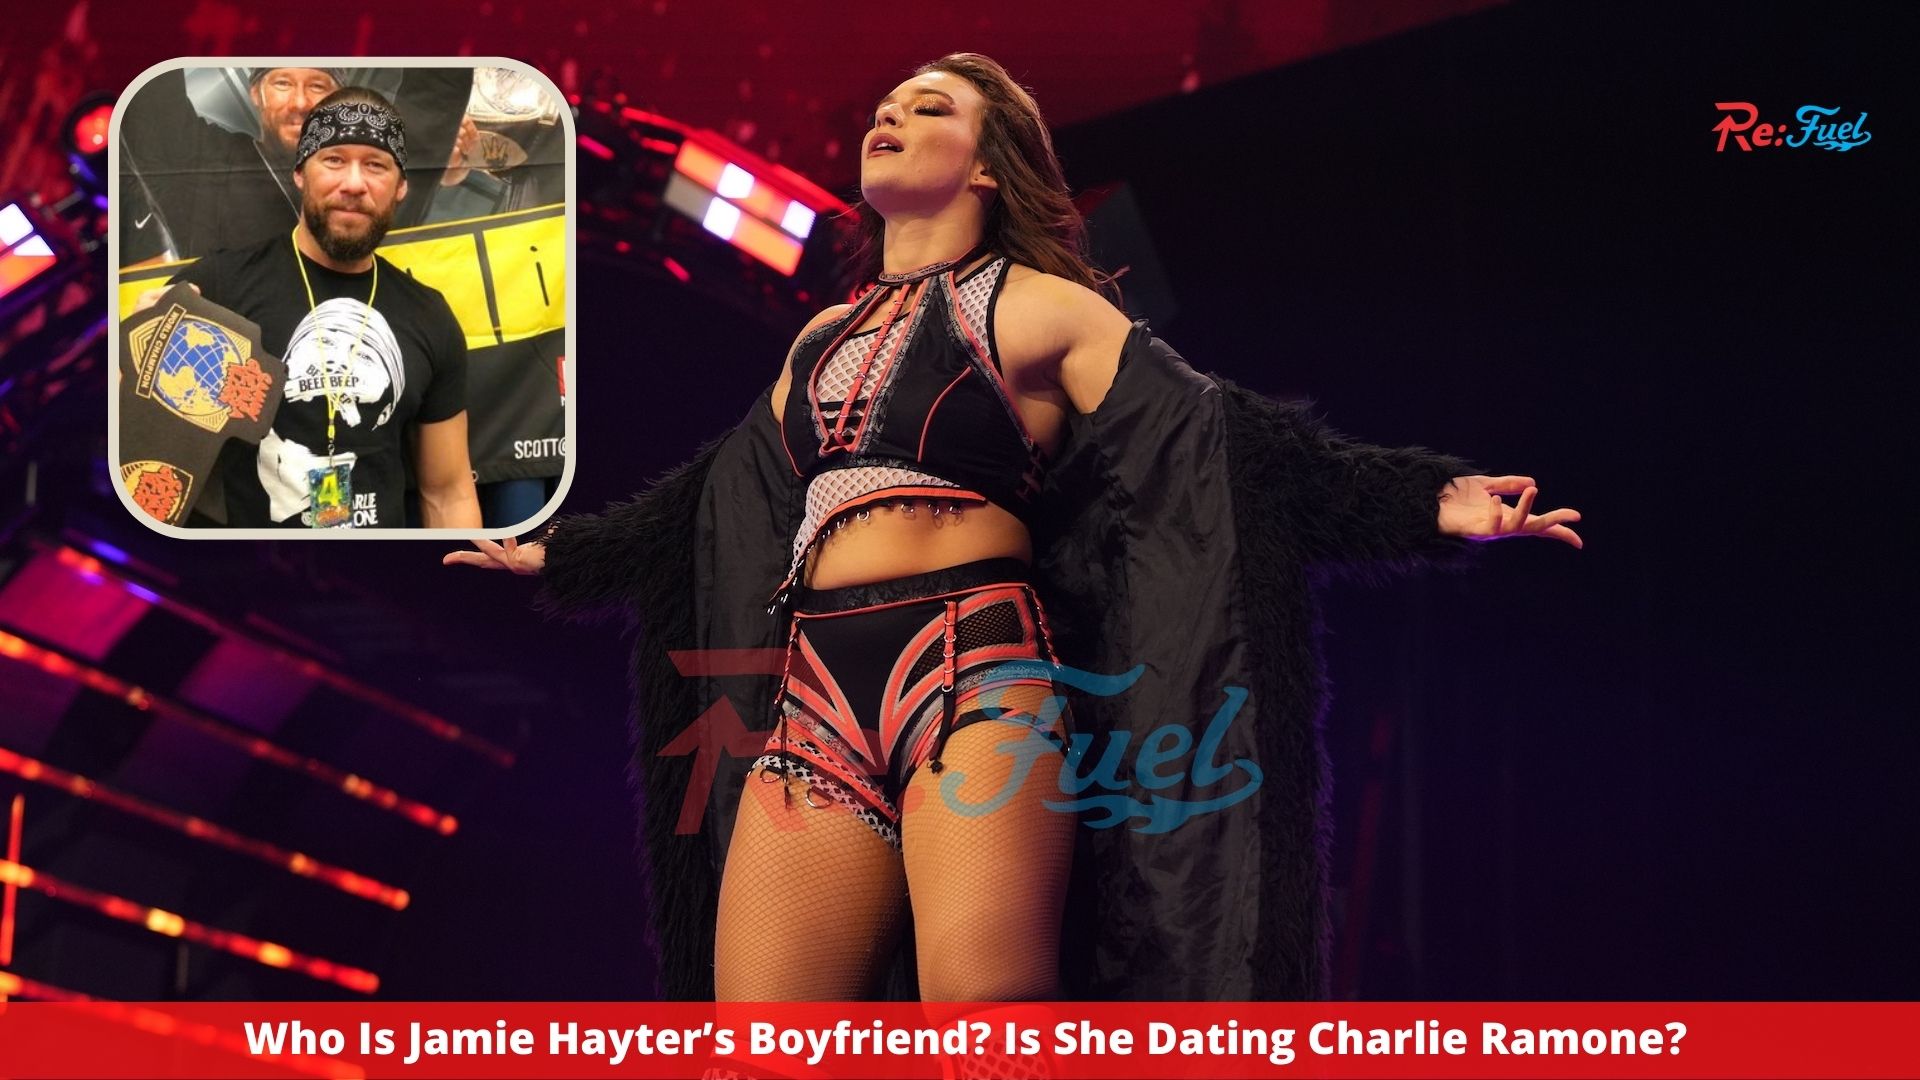 Who Is Jamie Hayter’s Boyfriend? Is She Dating Charlie Ramone?